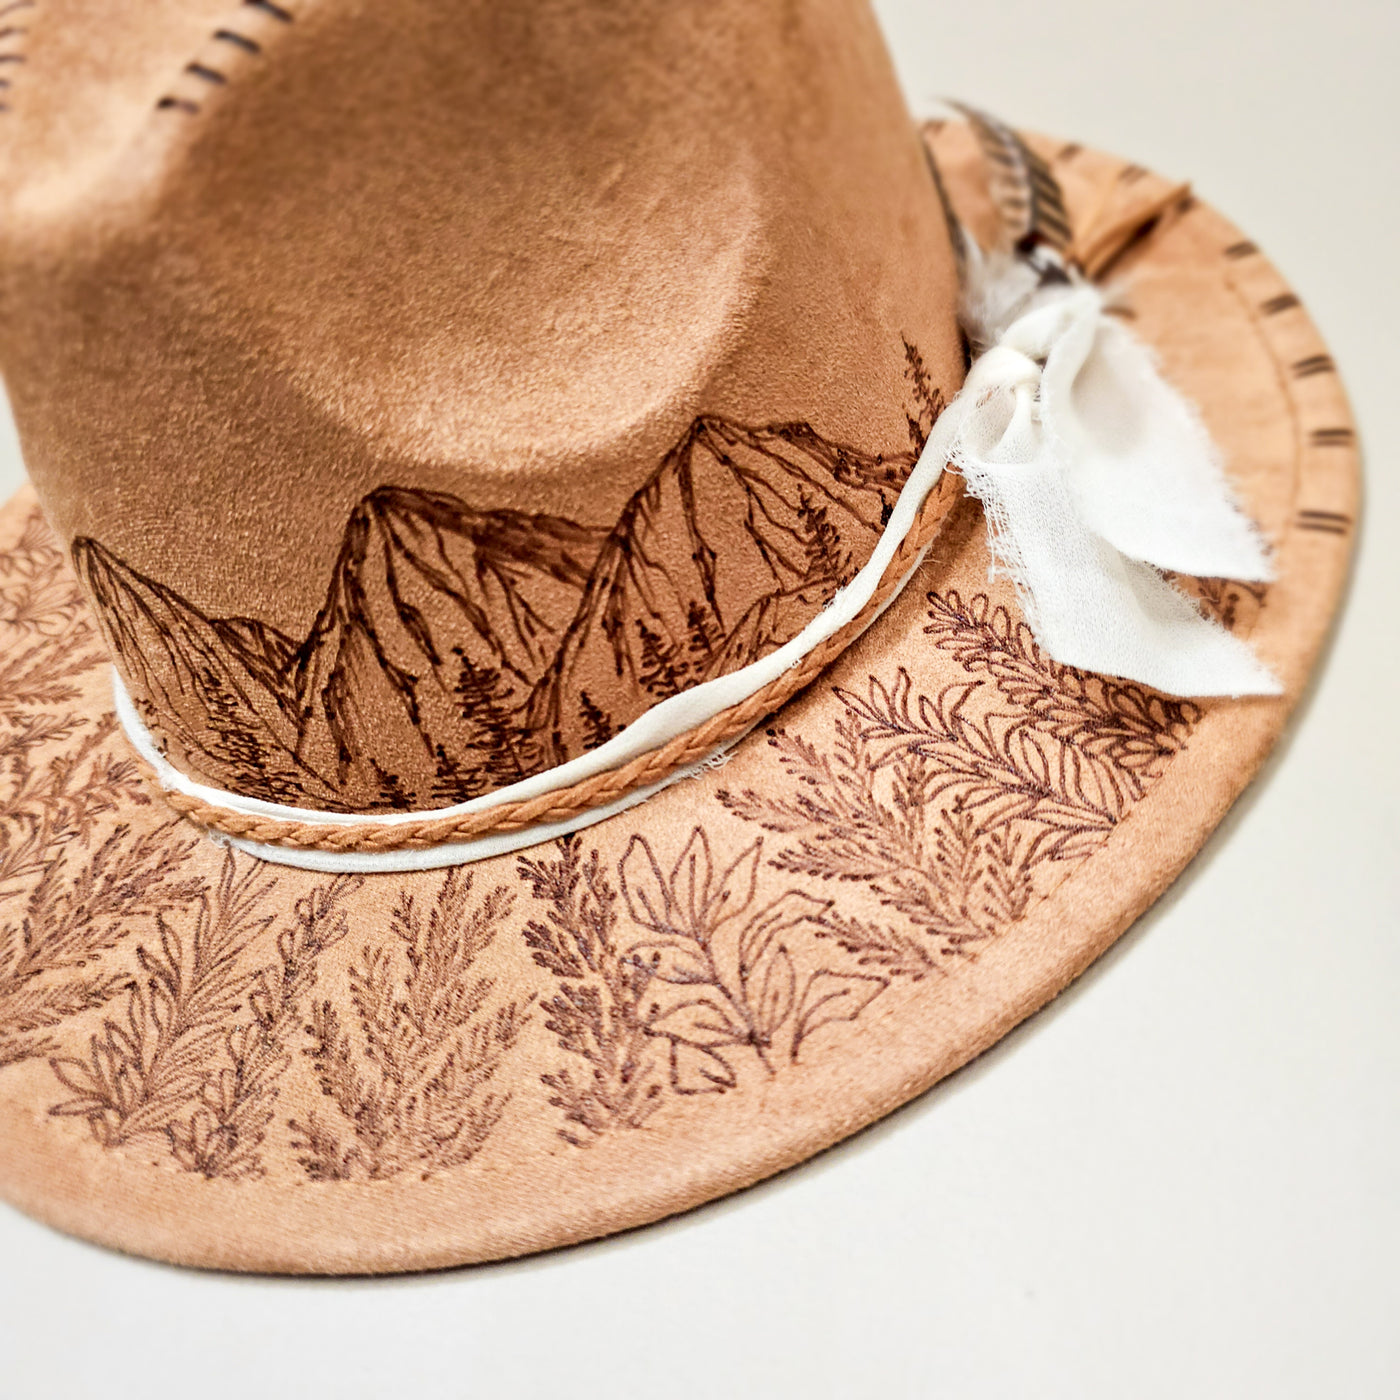 Wildflower Mountain || Light Tan Freehand Burned Felt Fedora Small Brim Hat